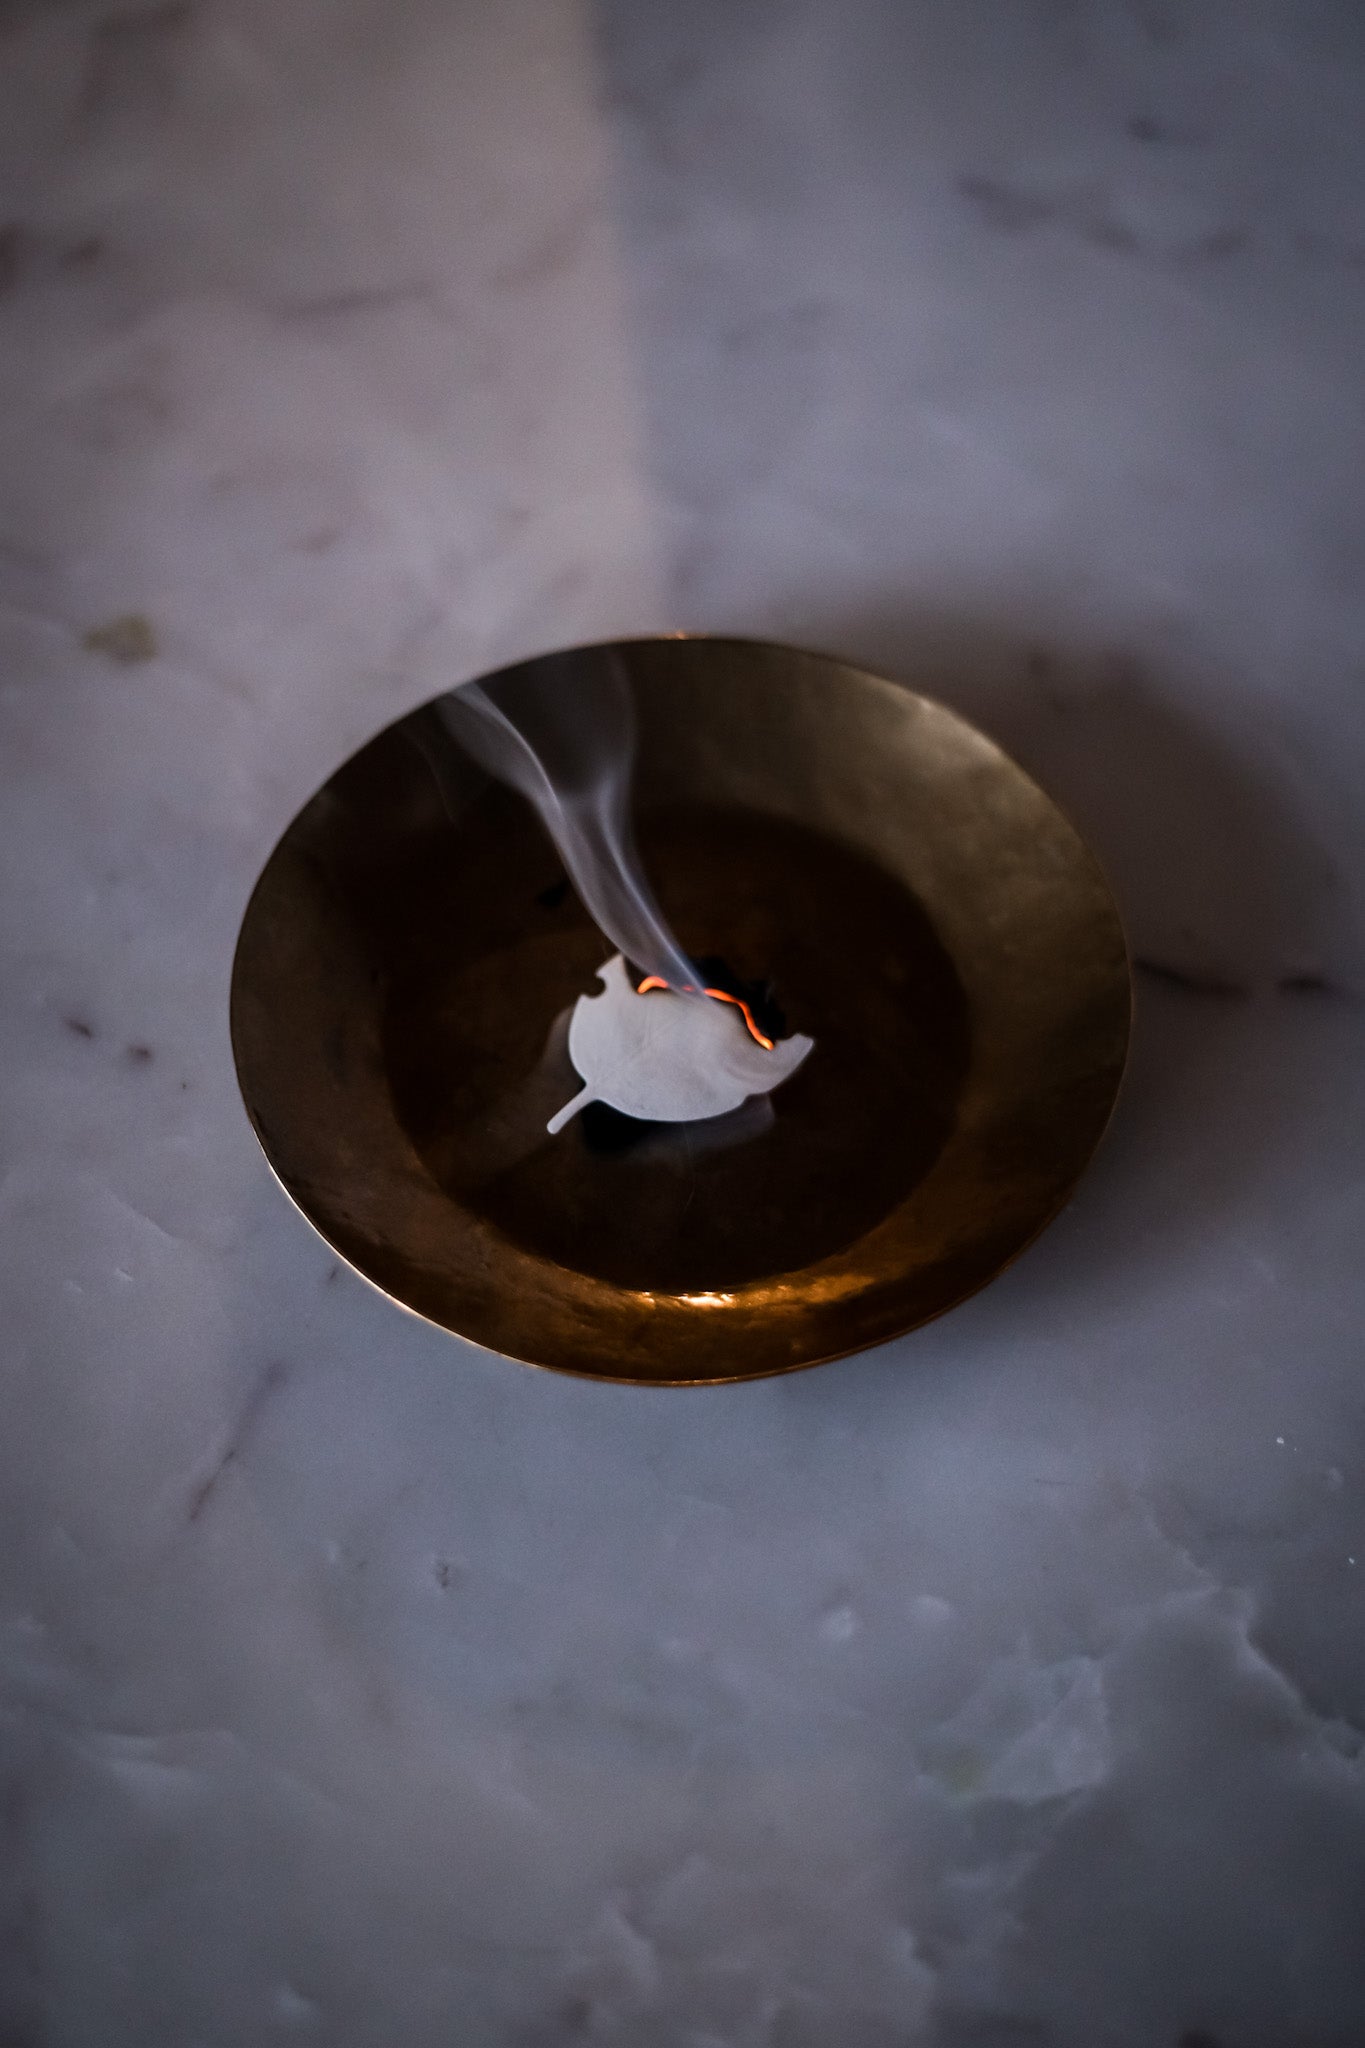 Burning white leaf inside a gold bowl 